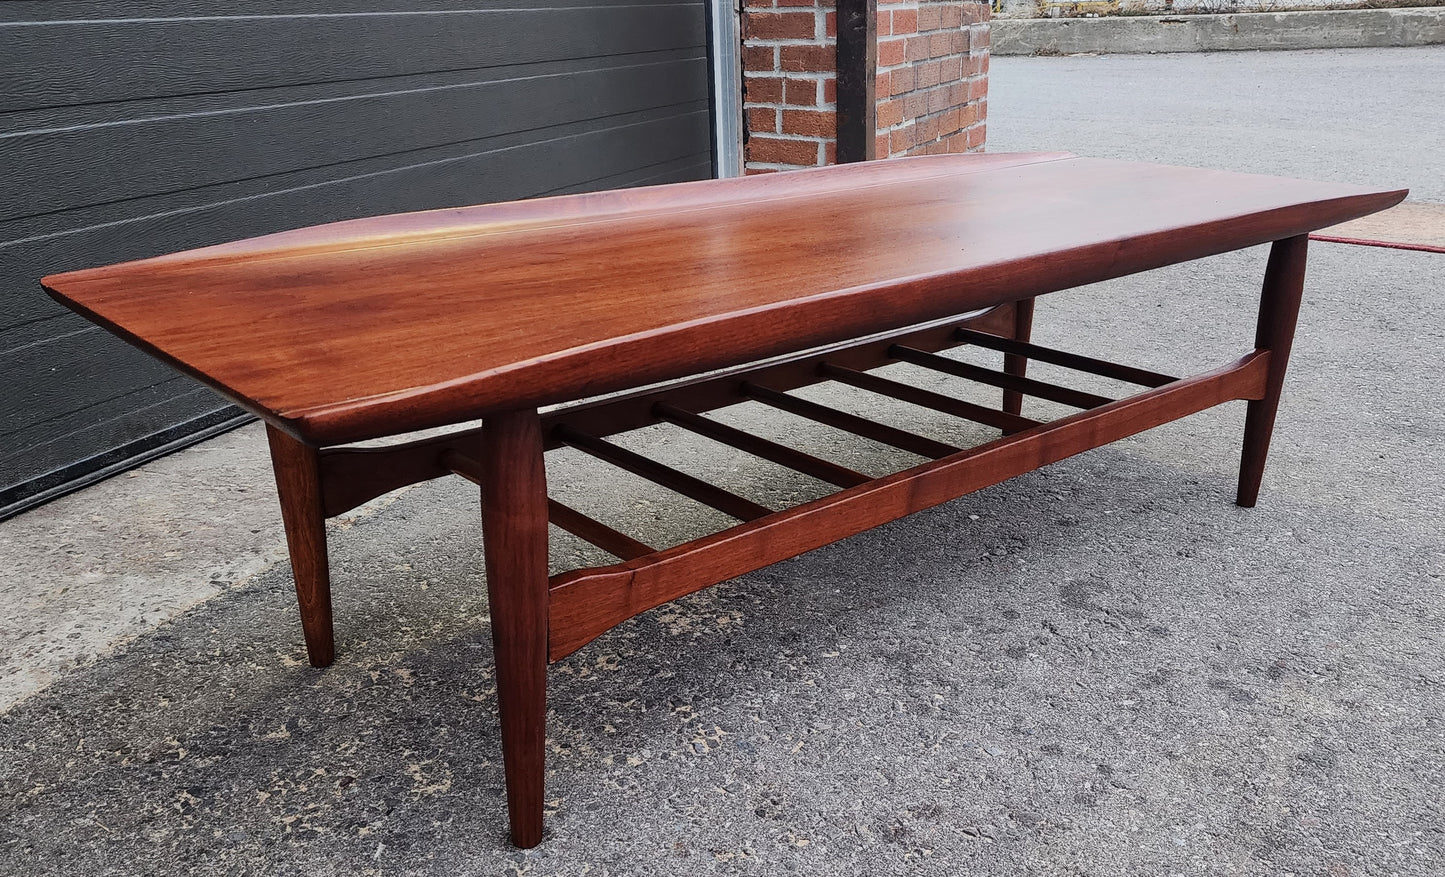 REFINISHED Mid Century Modern walnut coffee table w slatted shelf, 54"